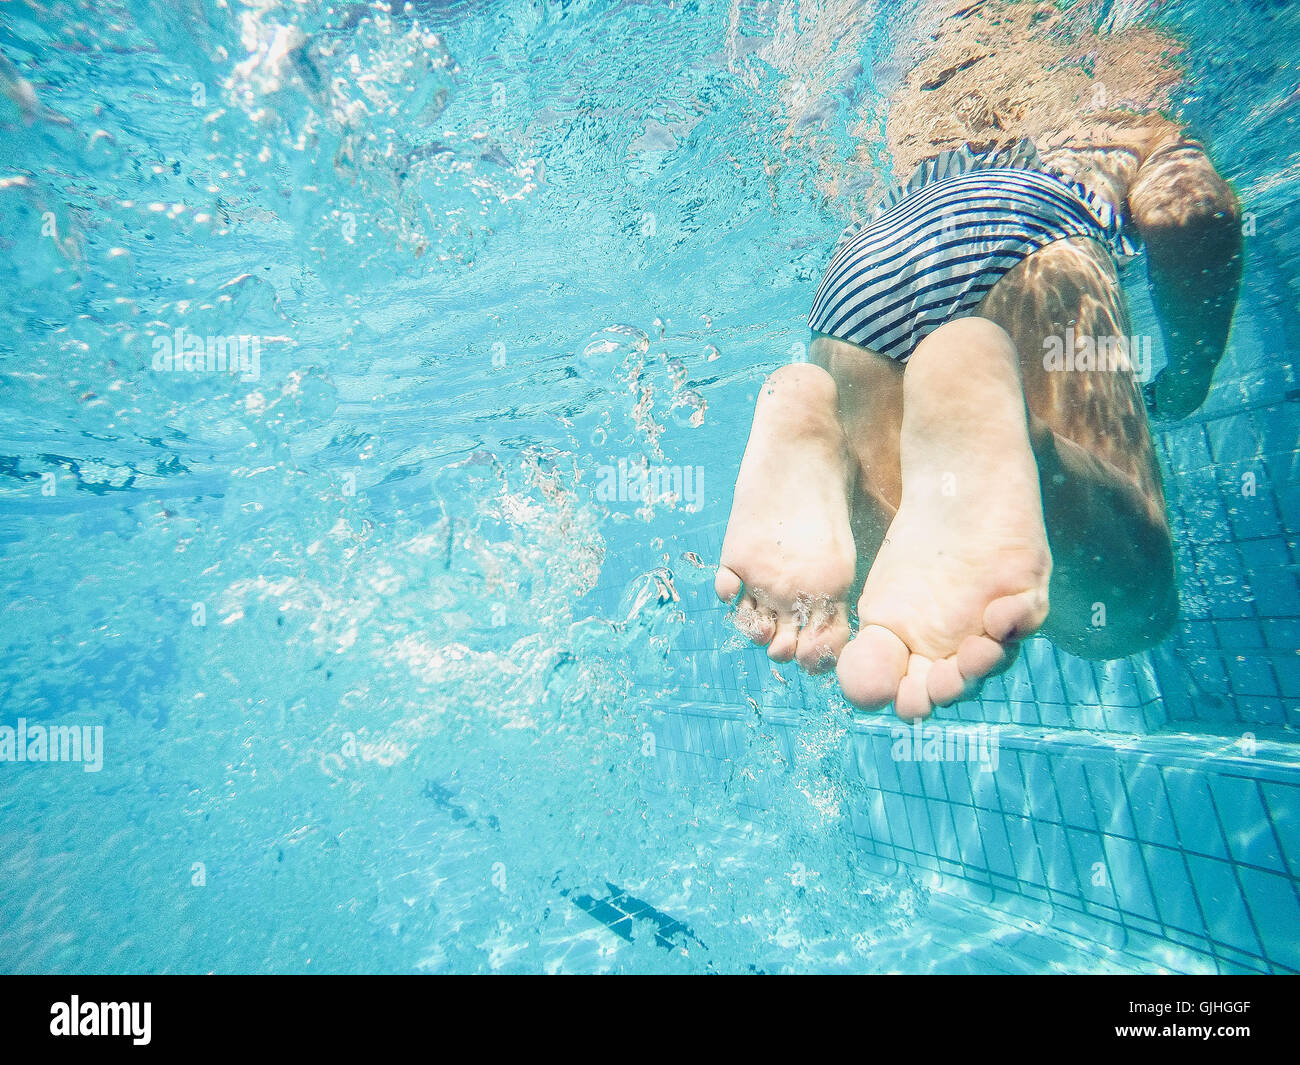 Vista submarina de una chica en la piscina Foto de stock